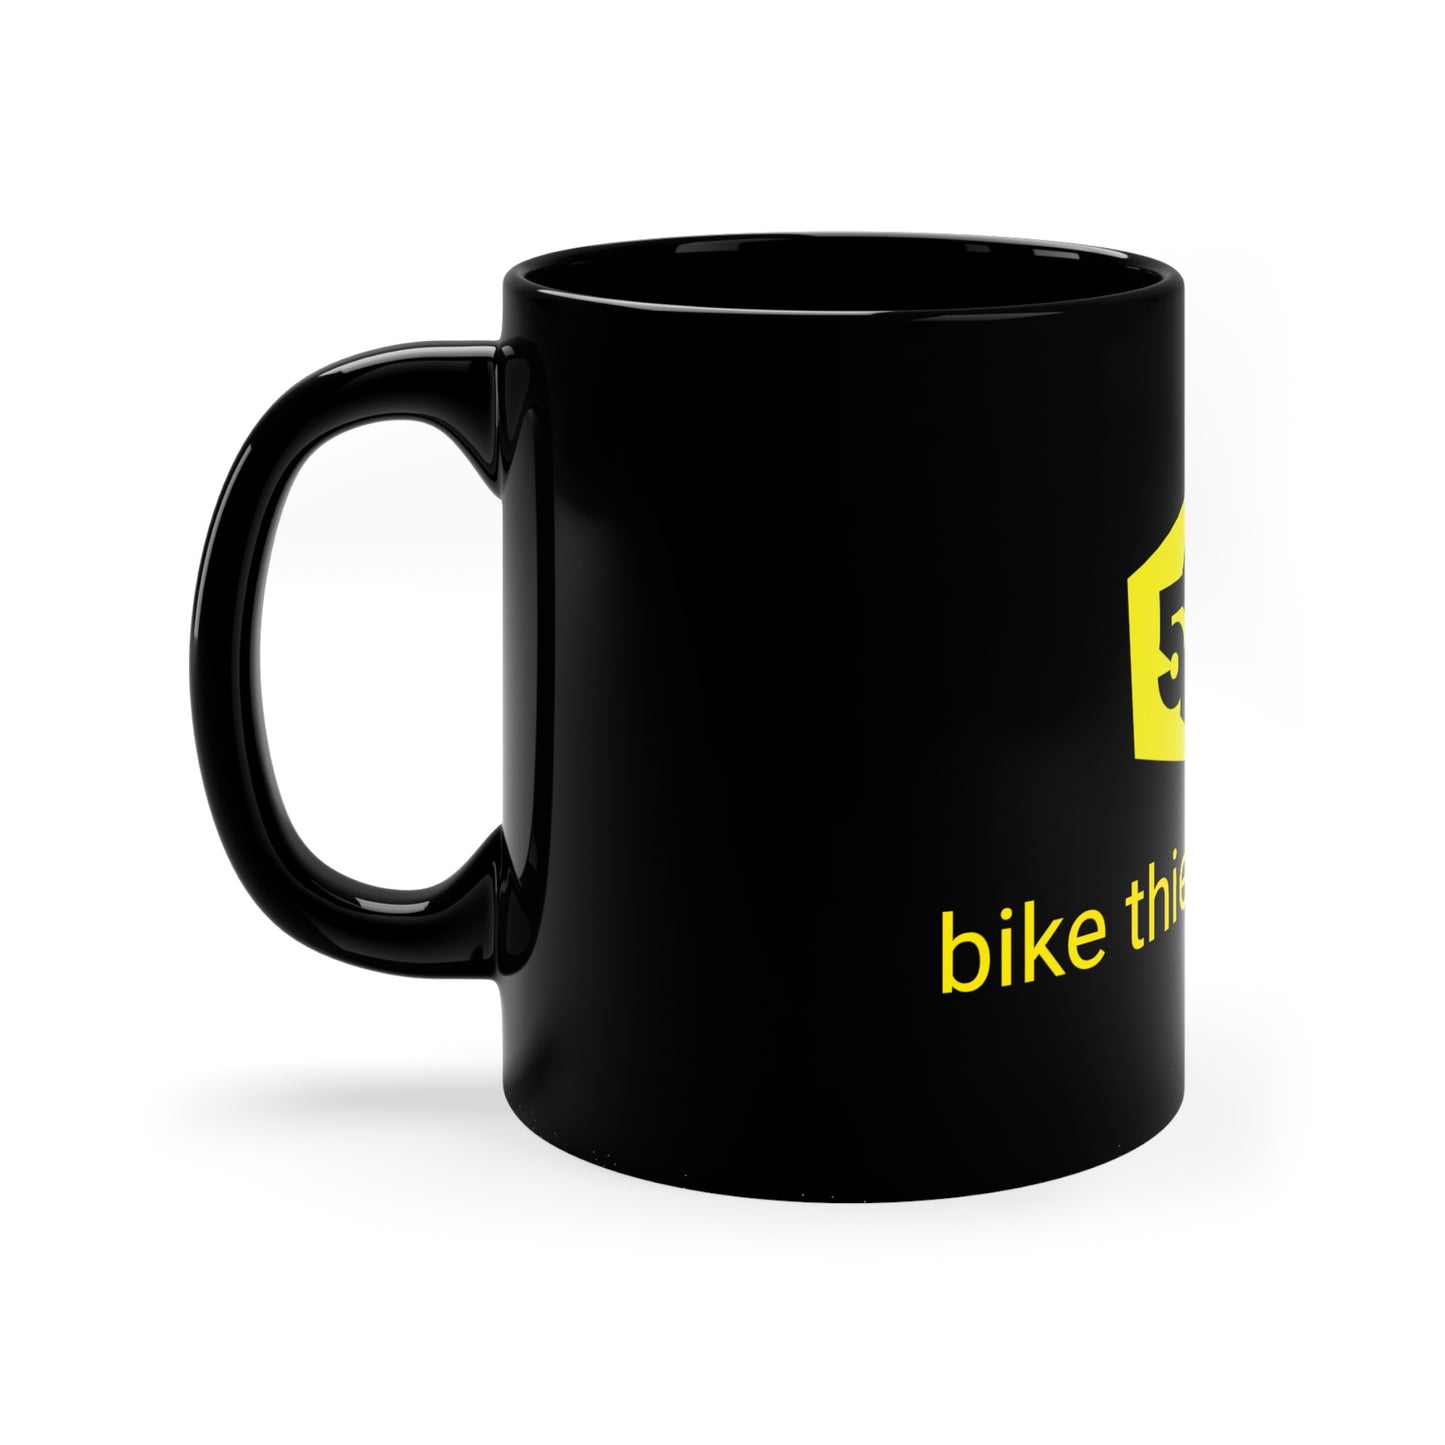 Bike thieves suck mug